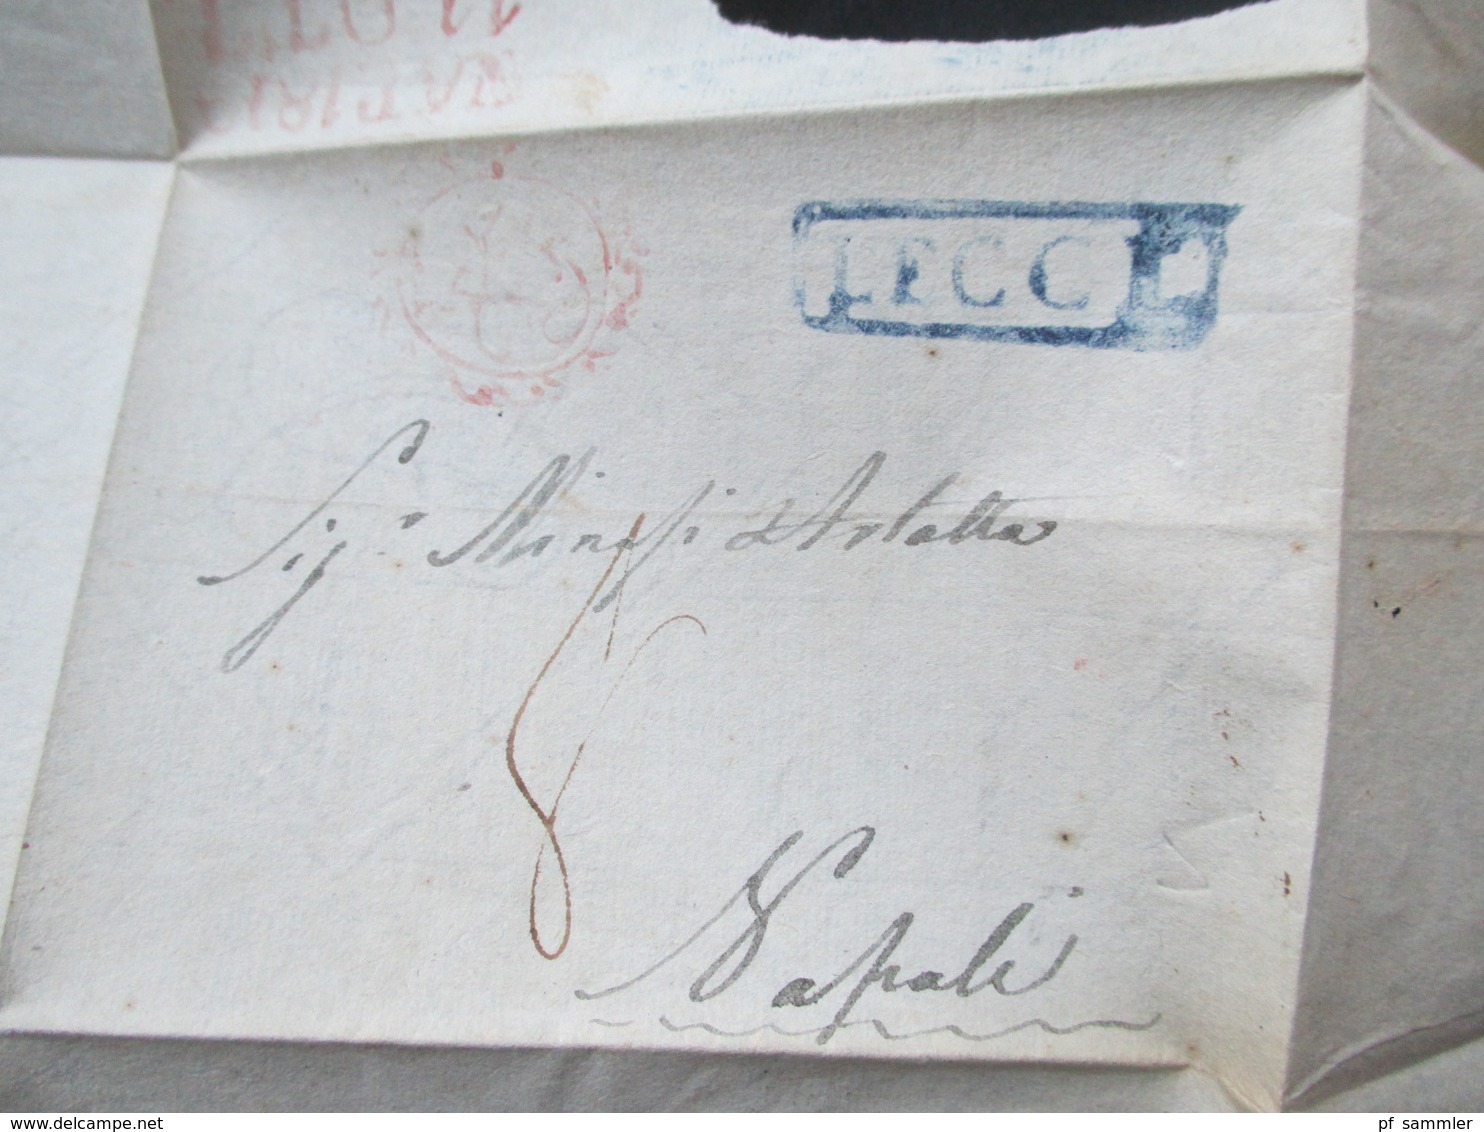 Italien 1819 Lecce - Napoli. Barfreimachung! Tax Kontrollstempel rot! Vorphila Faltbrief! Markenloser Brief